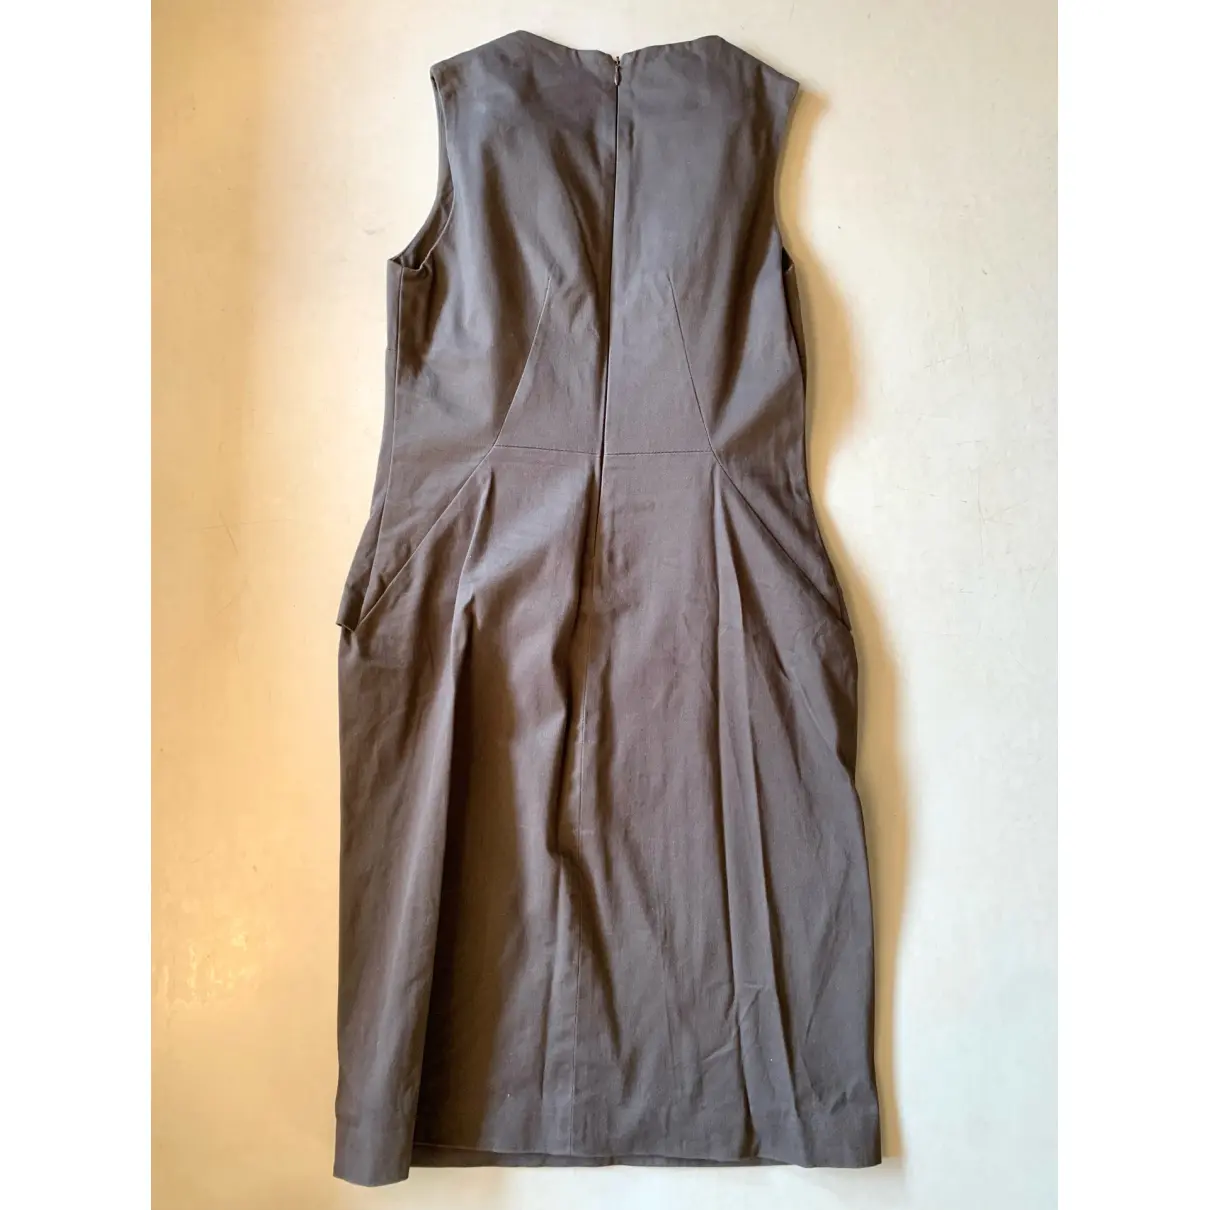 Buy Stelios Koudounaris Mid-length dress online